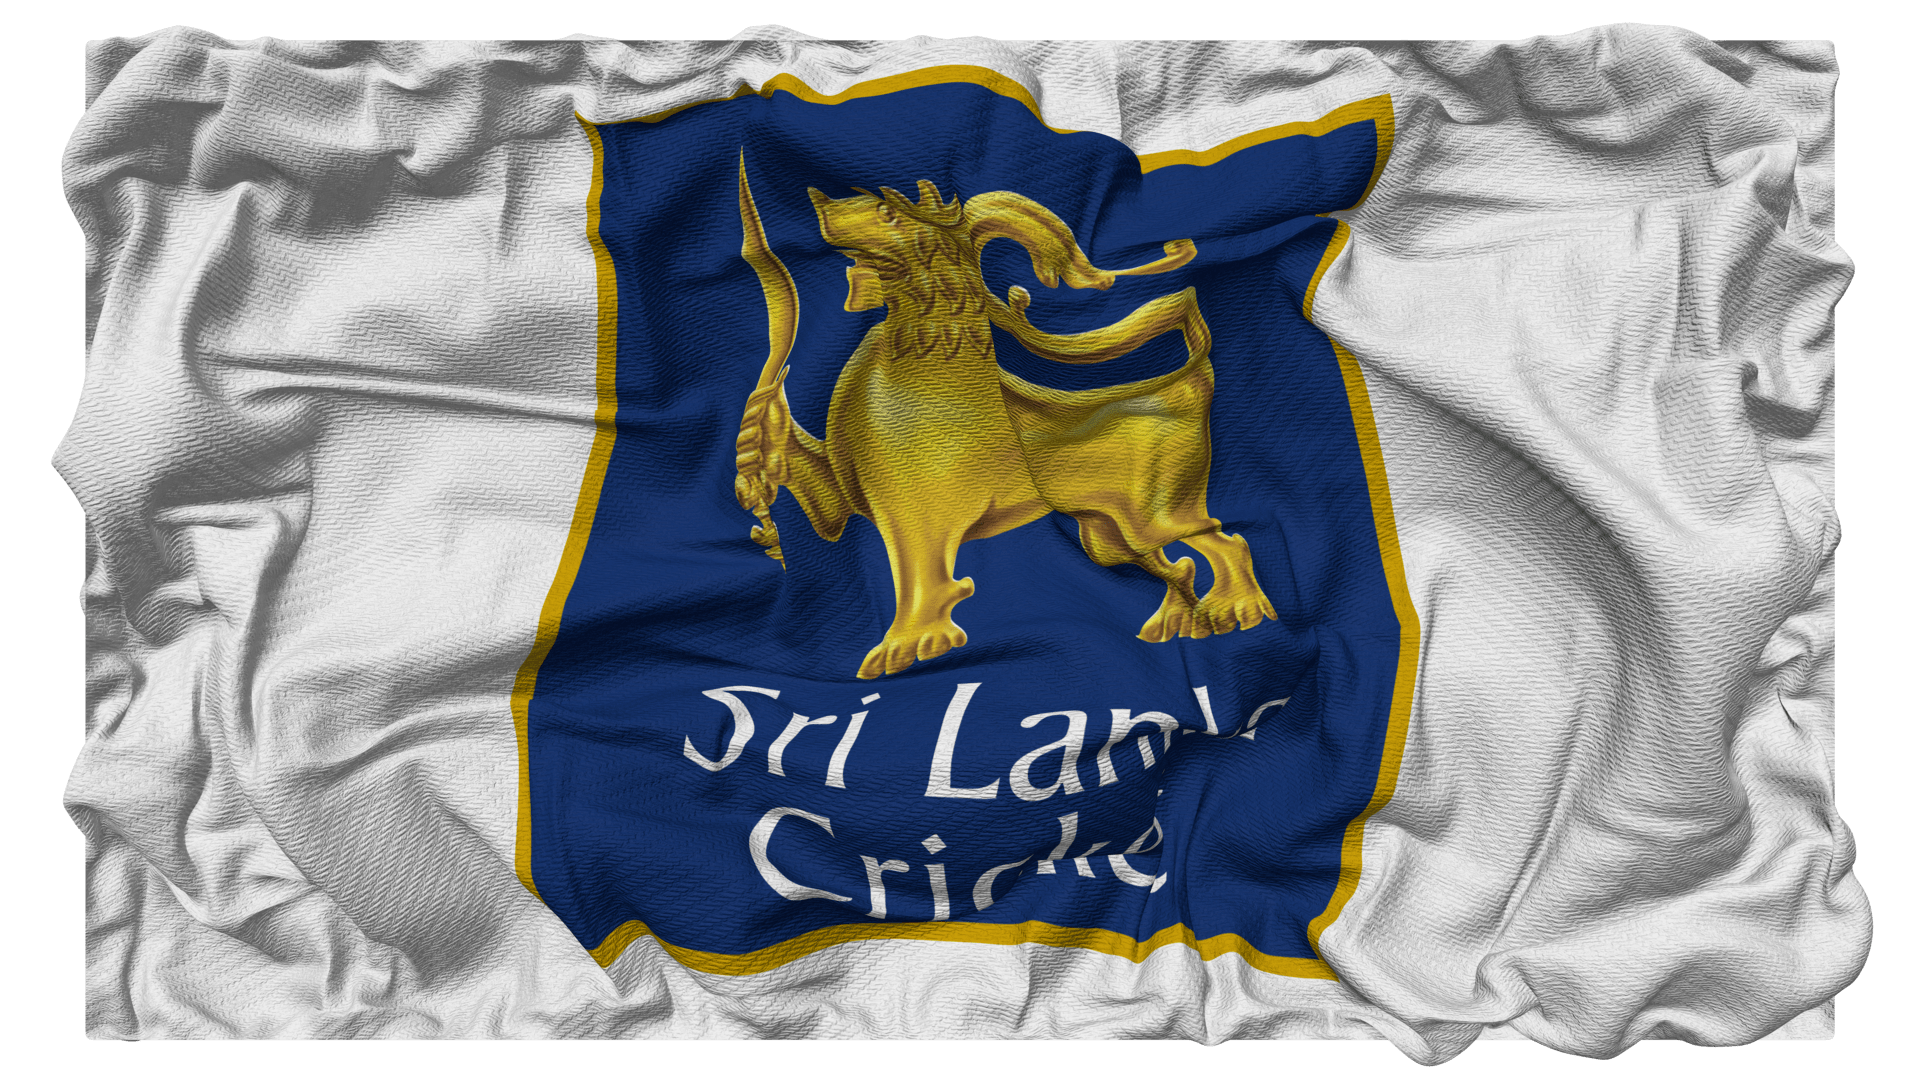 ICC Board Decision on Sri Lanka Cricket